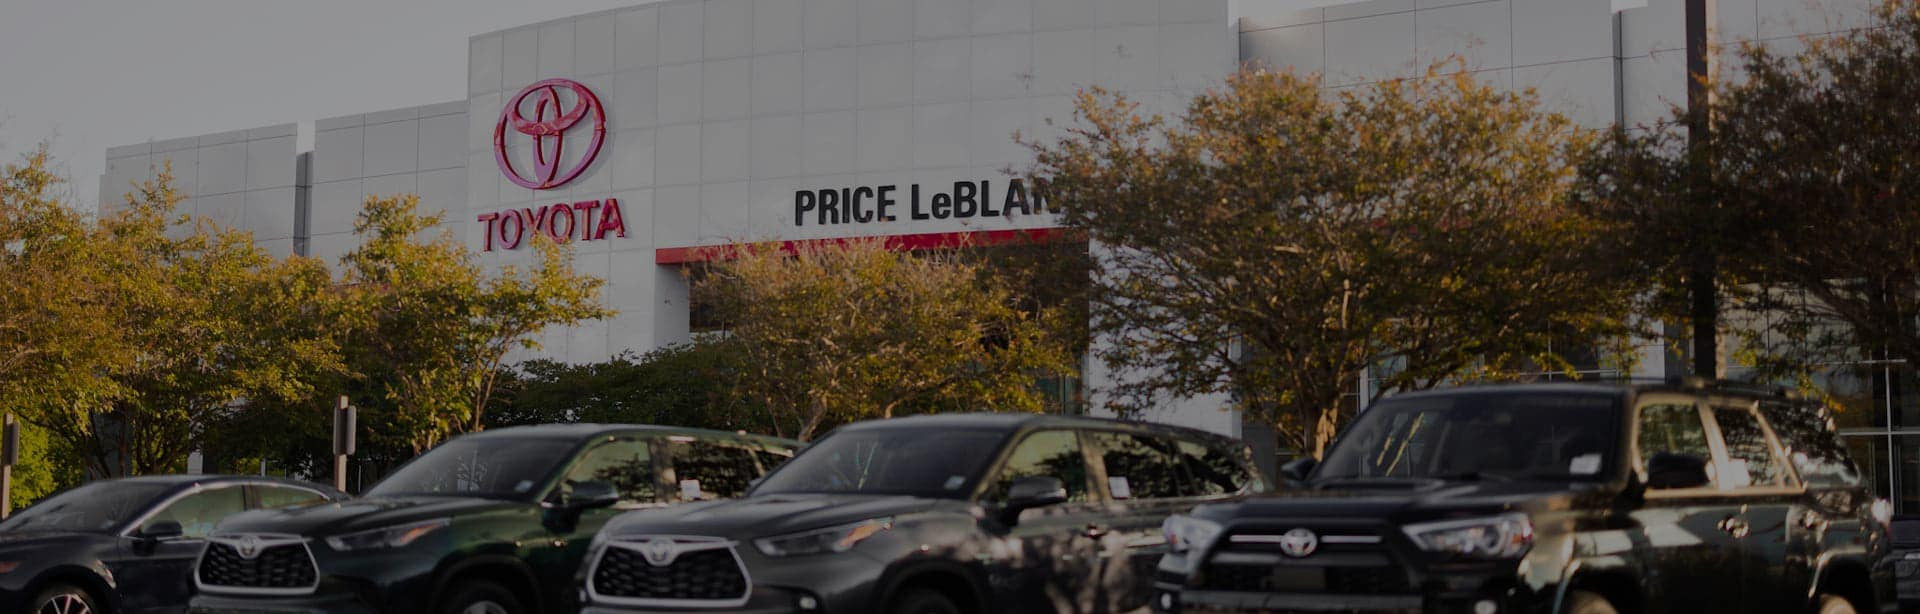 Toyota Dealership Near Me | Baton Rouge, La | Price Leblanc Toyota for Price Leblanc Toyota